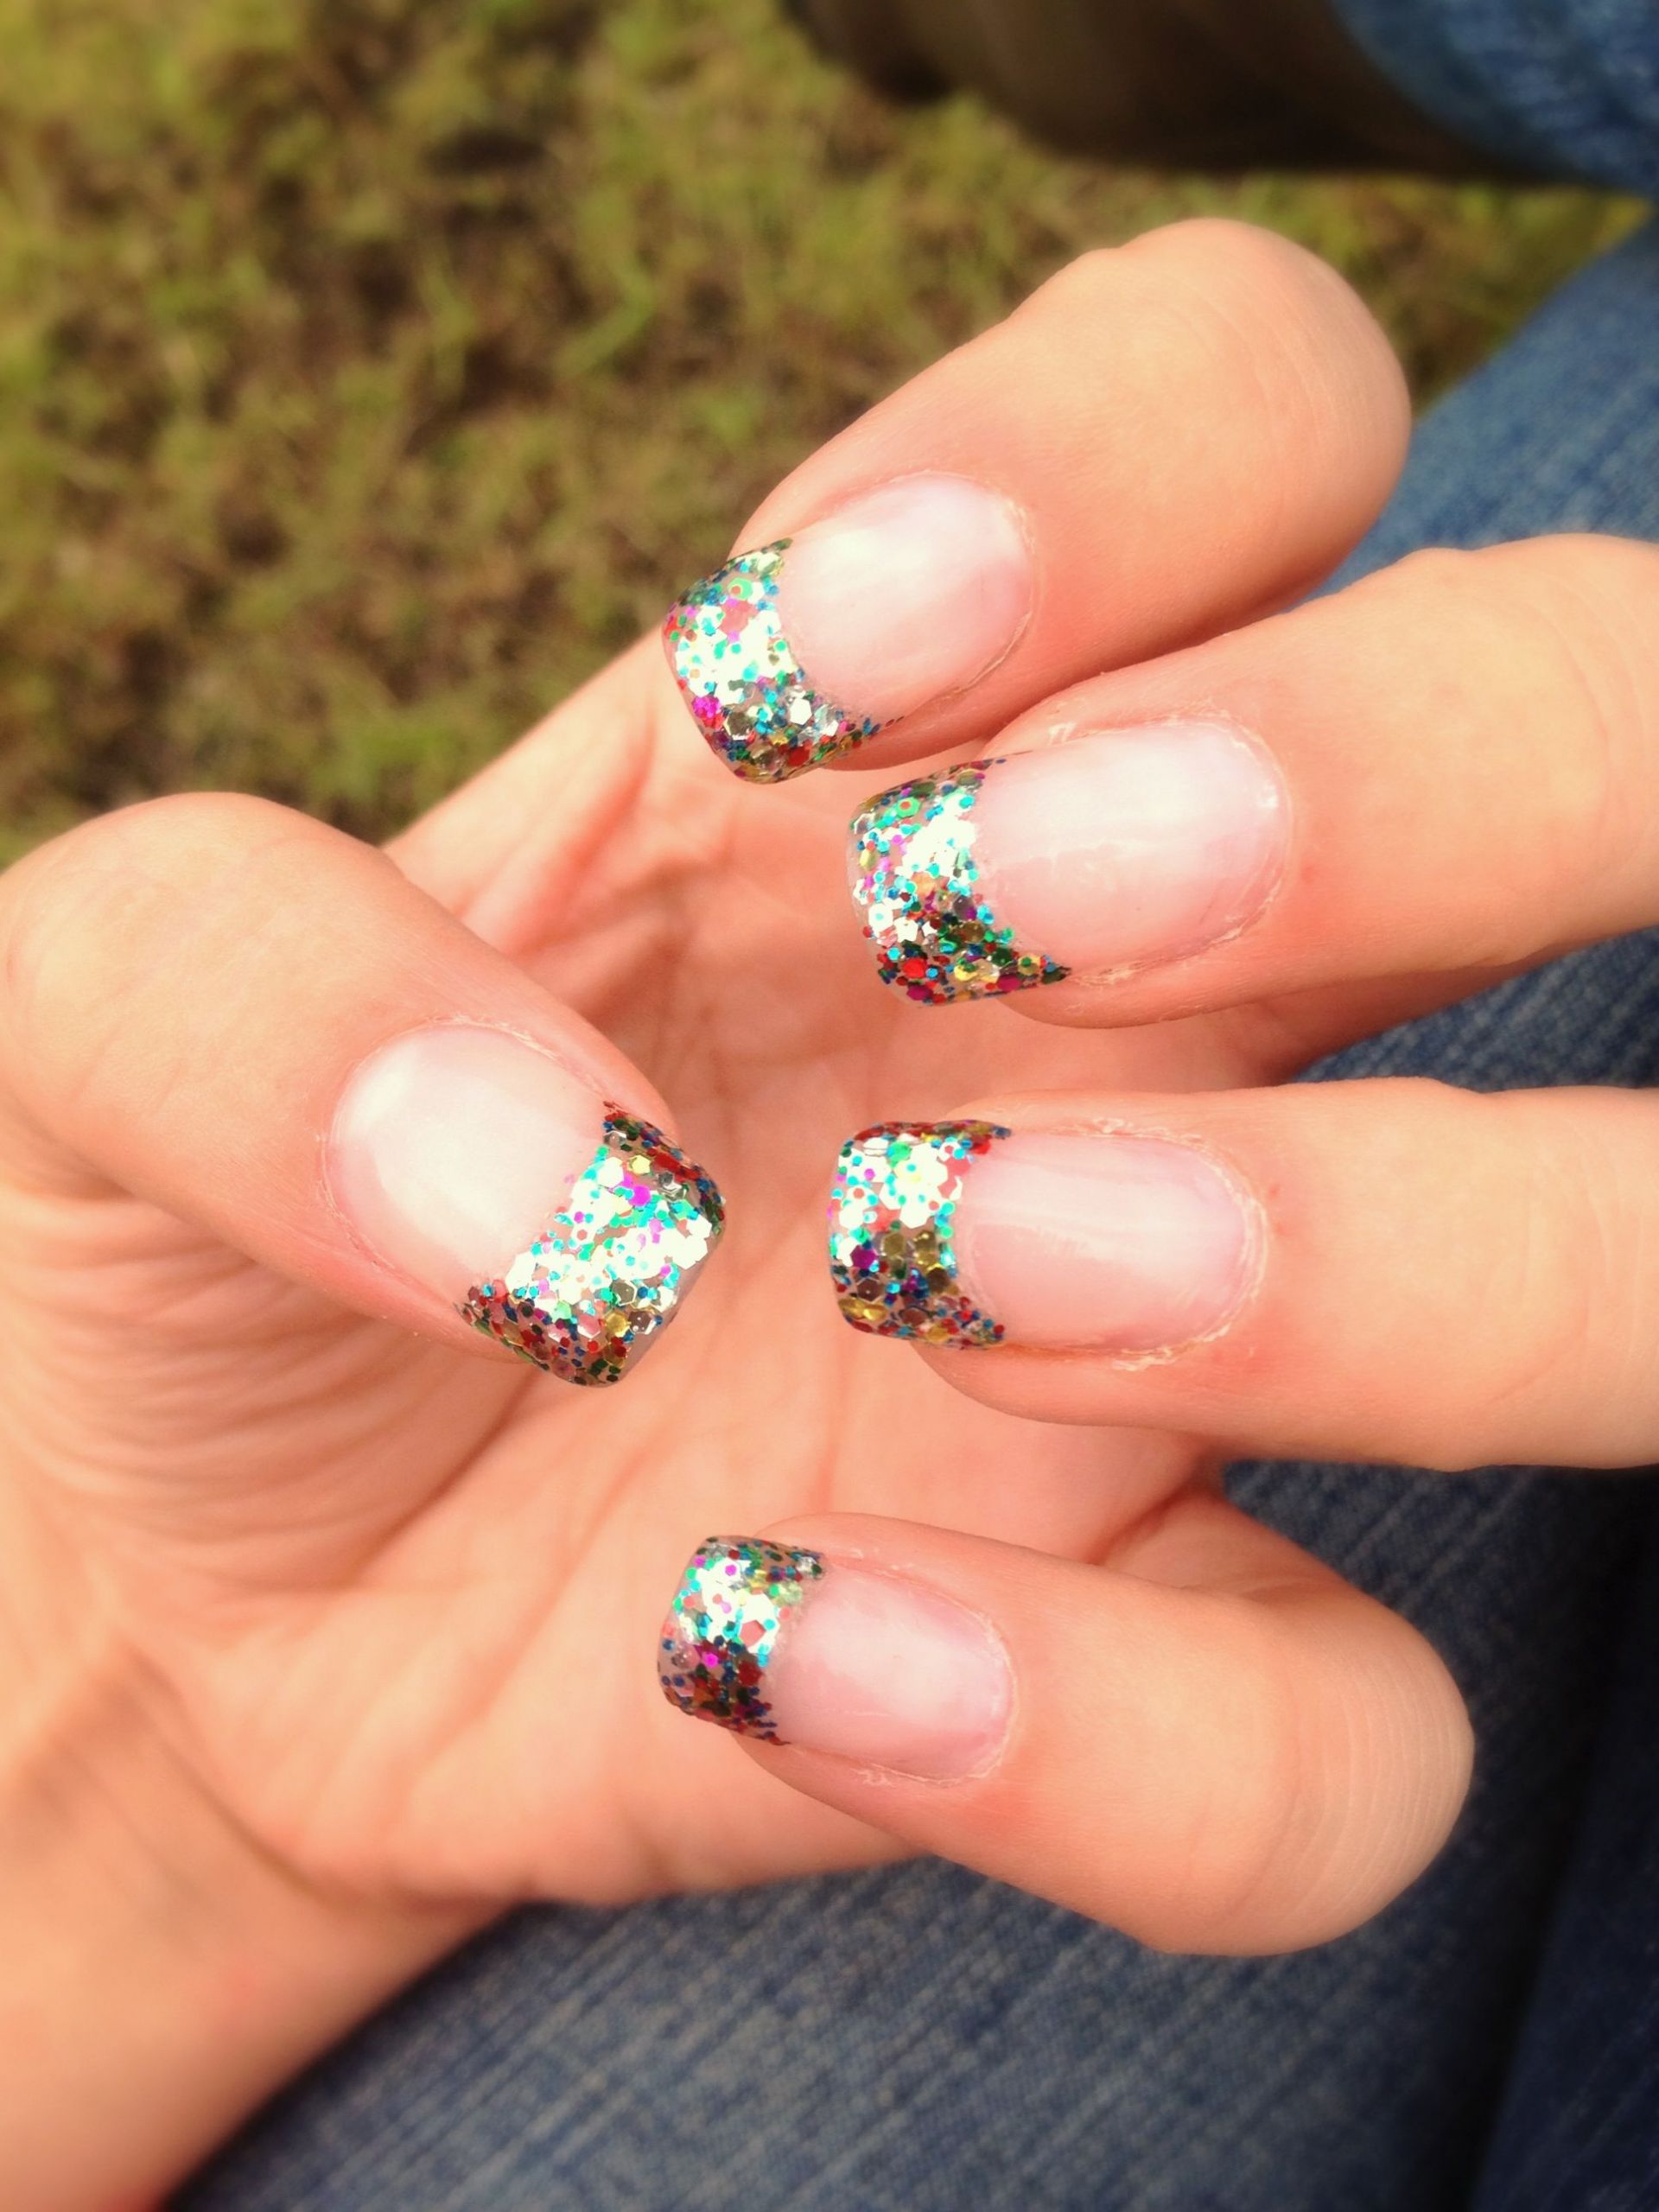 Acrylic Nails With Glitter Tips
 mermaid rainbow glitter nail tips Acrylic nail tip design